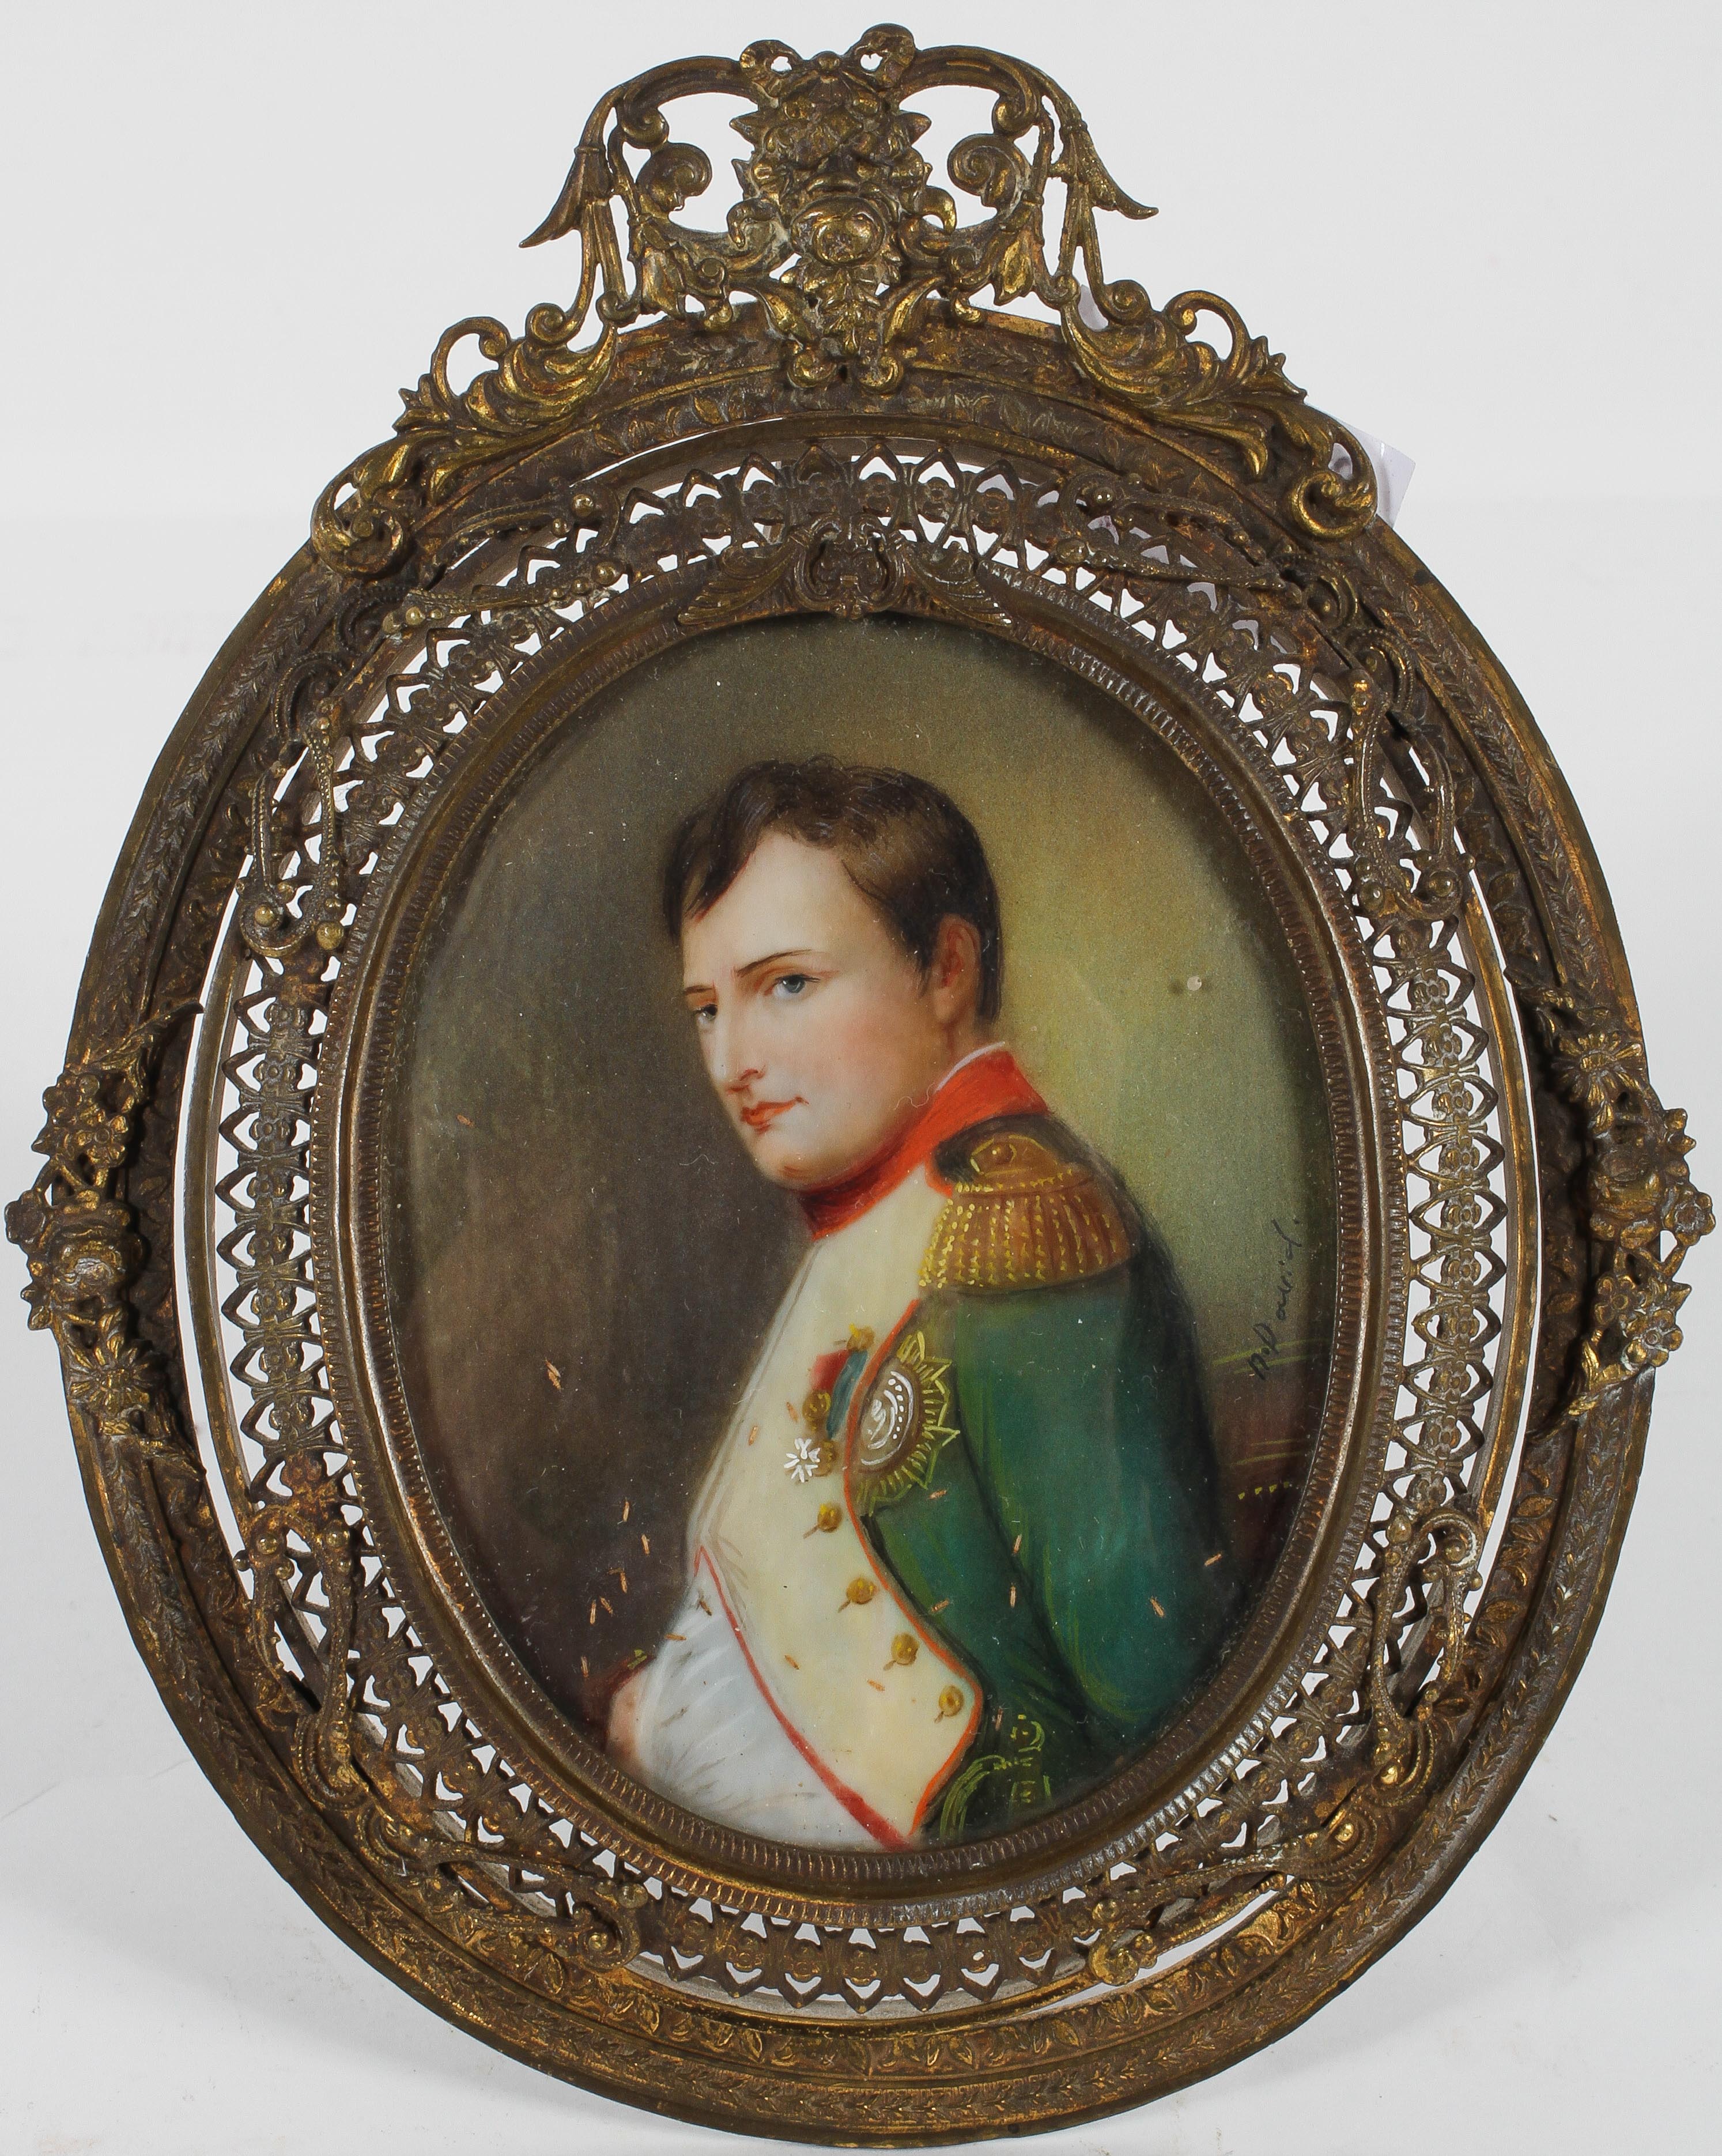 An oval miniature portrait Napoleon, signed N David, in pierced gilt strut frame, Image 8cm x 6cm,